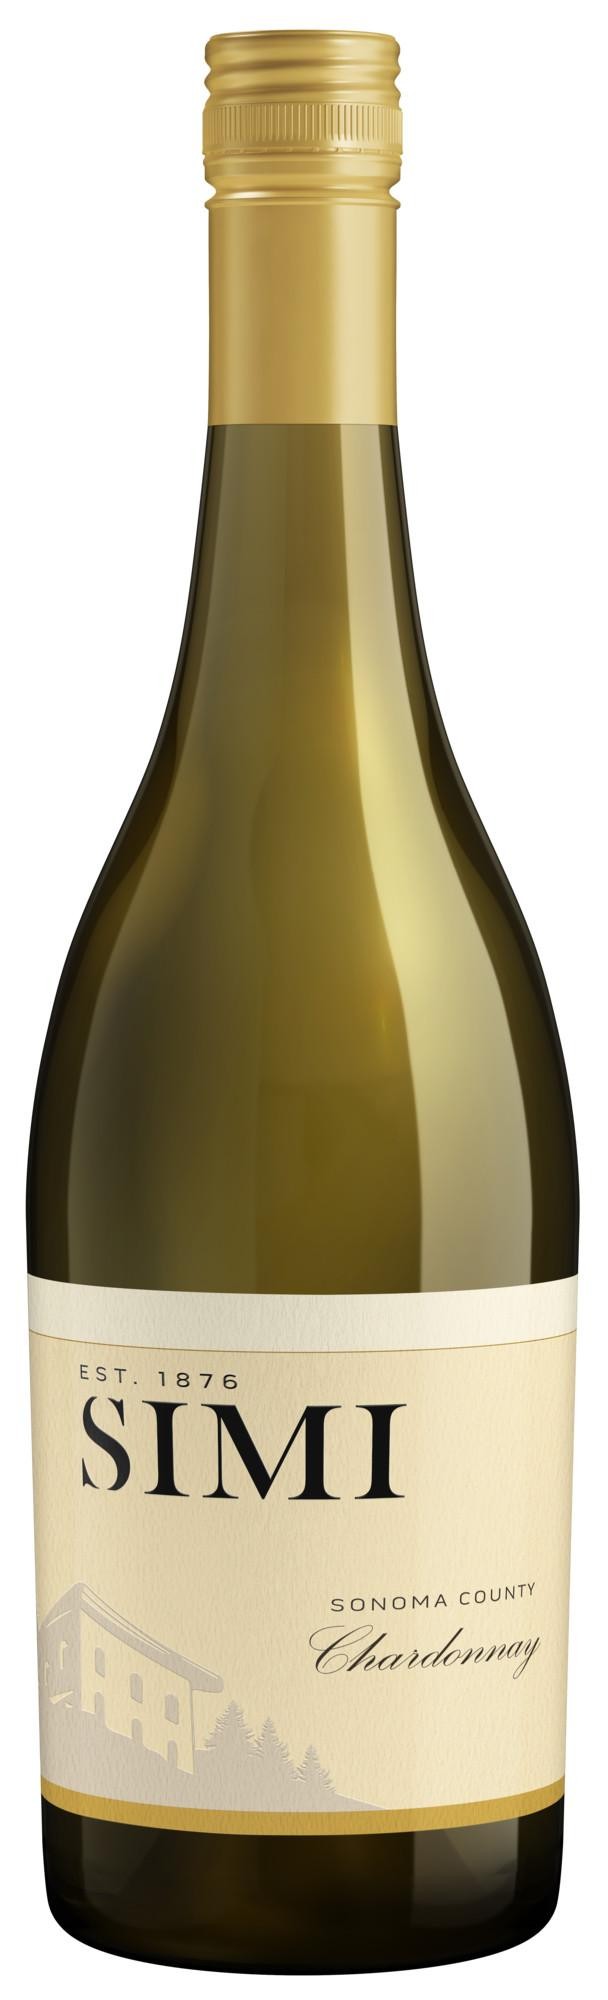 SIMI Sonoma County Chardonnay Wine - from California - 750ml Bottle